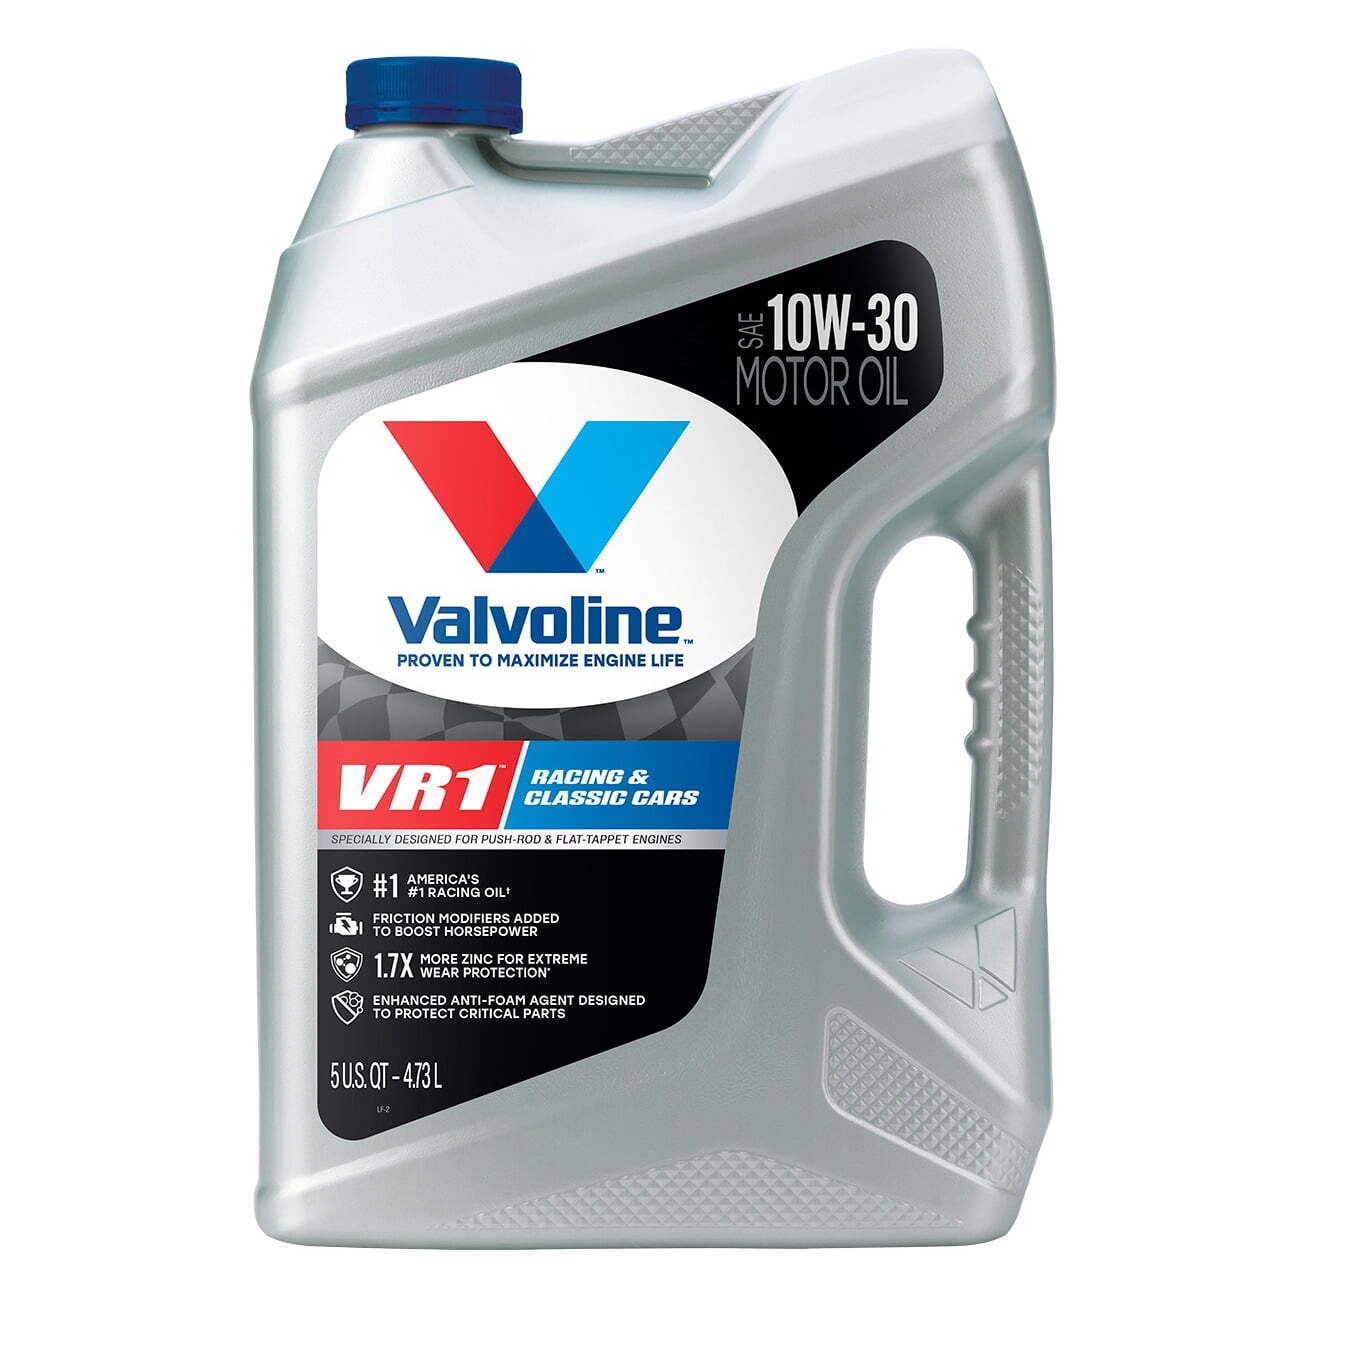 Valvoline VR1 Racing 10W-30 Motor Oil 5 QT